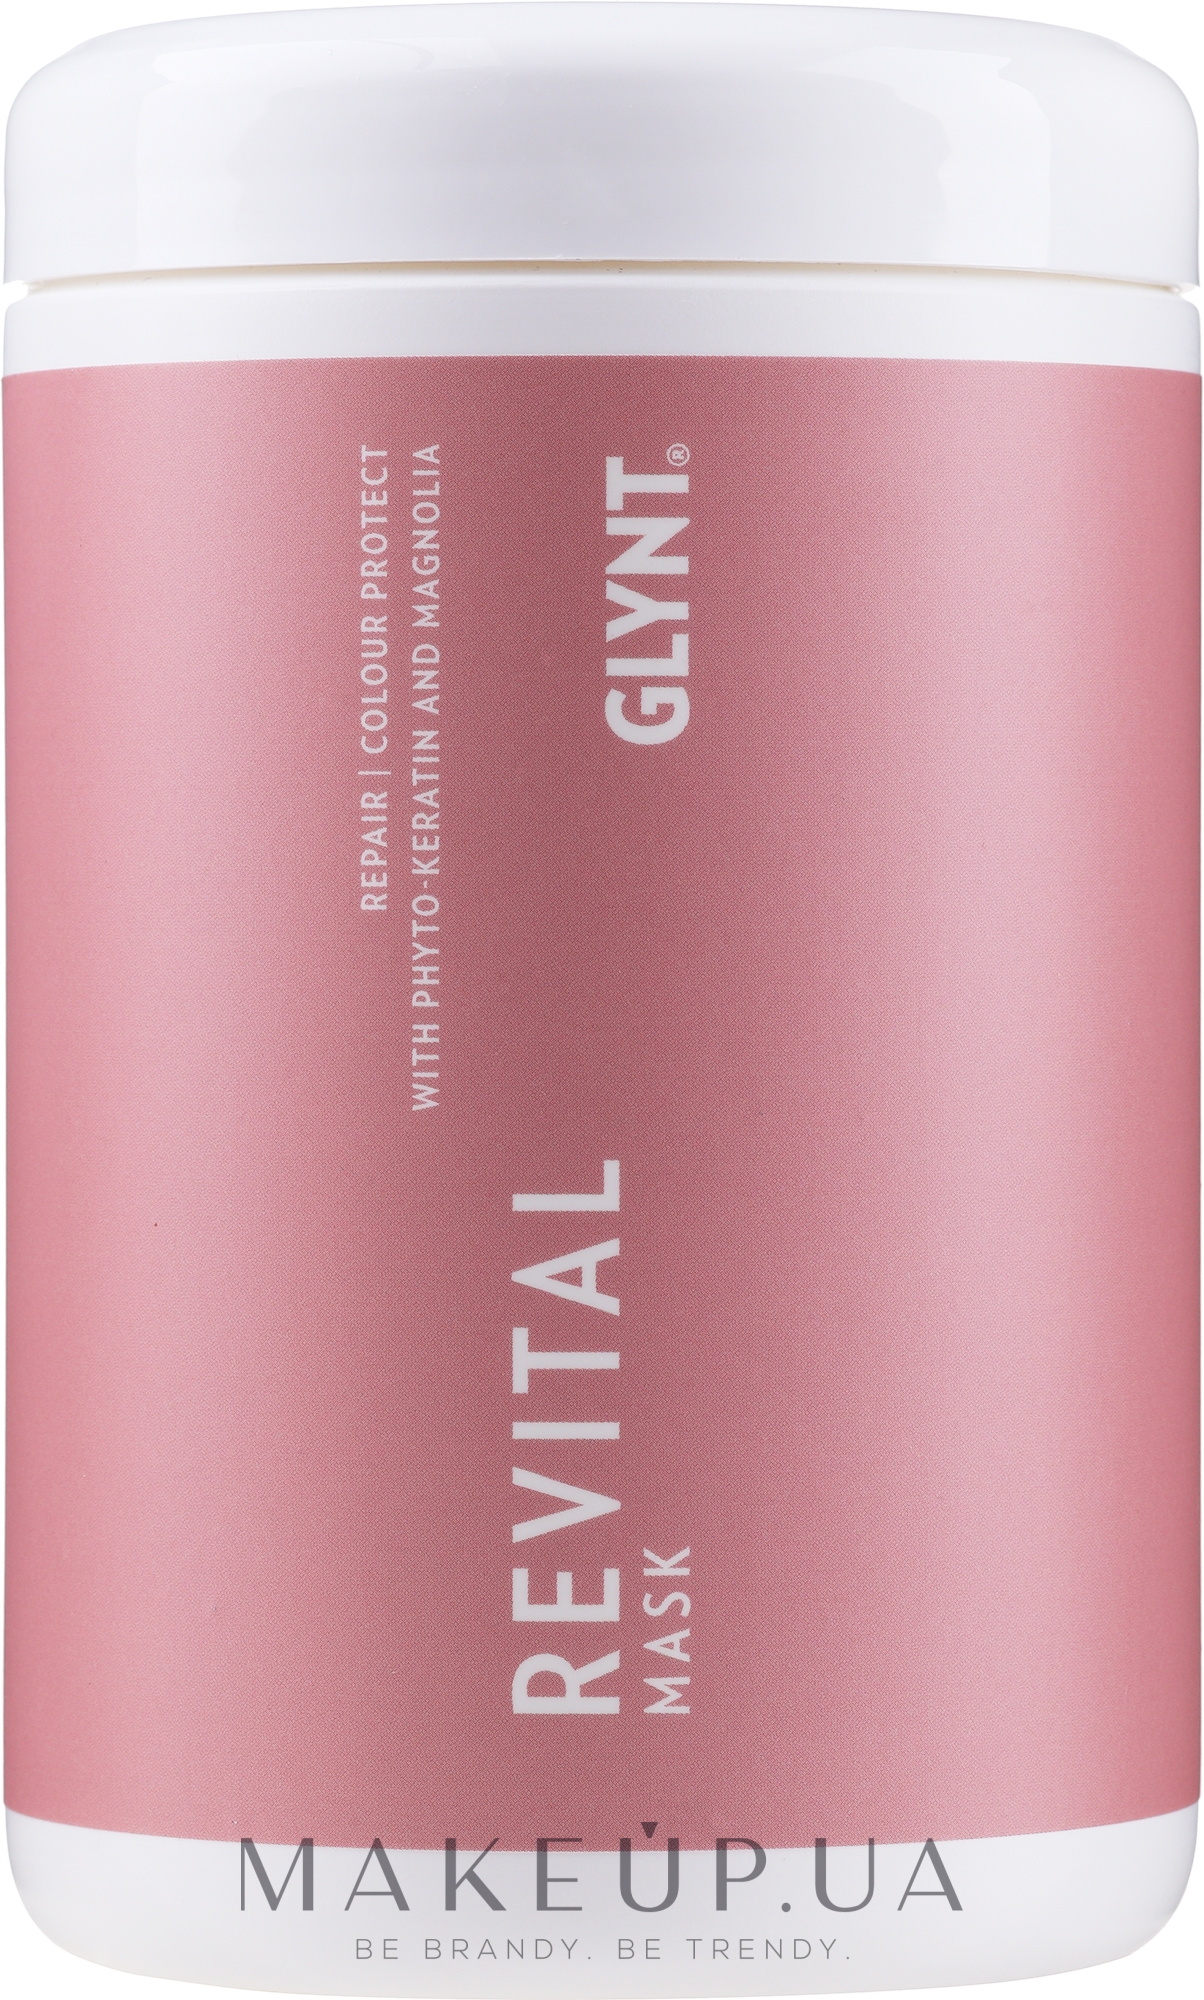 Восстанавливающая маска для окрашенных волос - Glynt Revital Regain Mask 03 — фото 1000ml